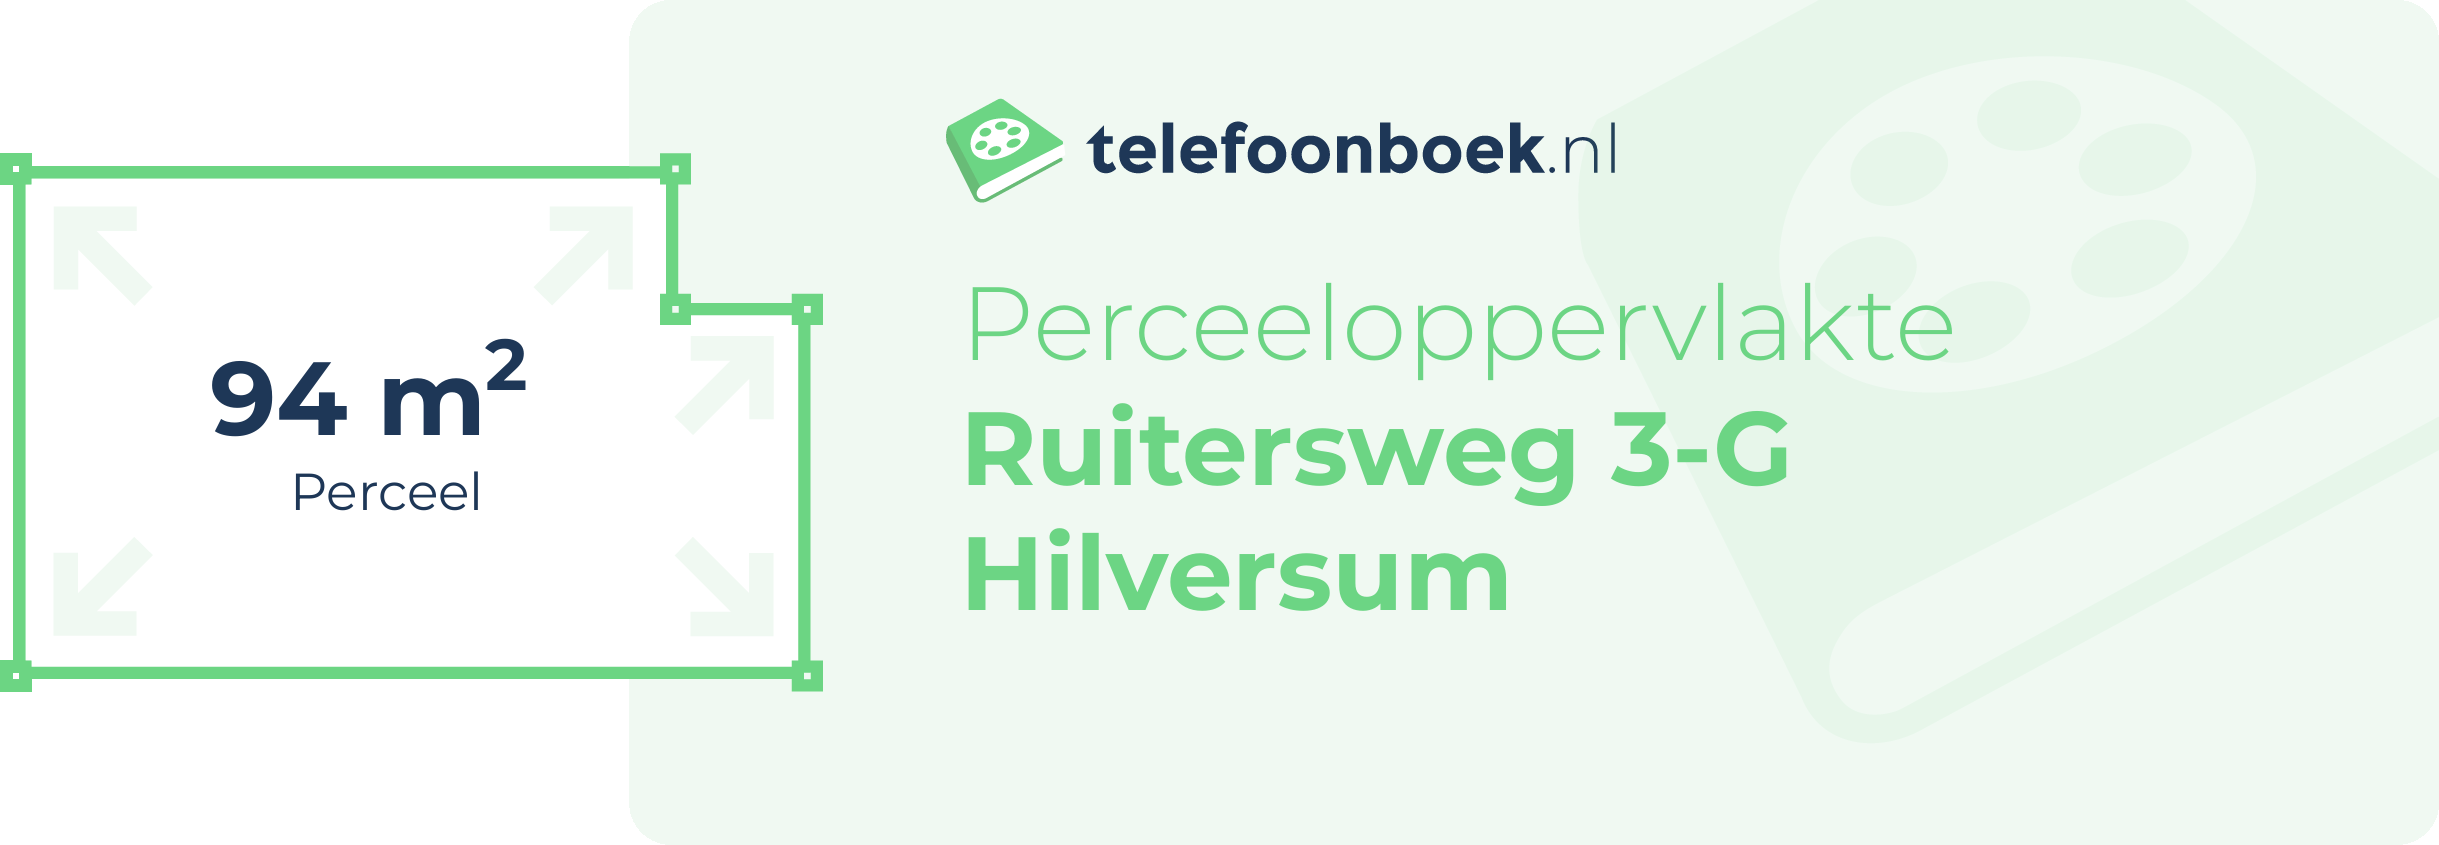 Perceeloppervlakte Ruitersweg 3-G Hilversum